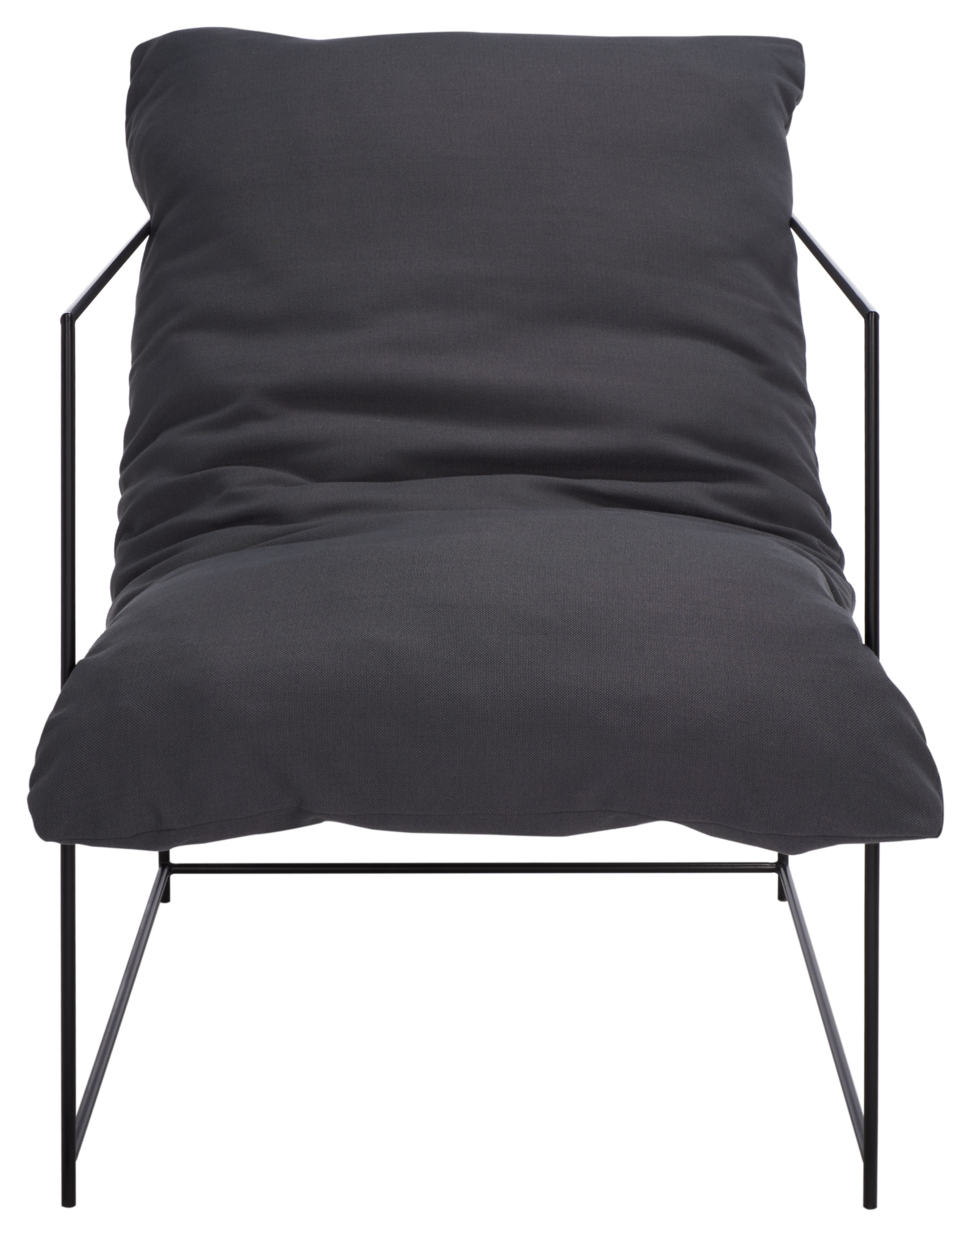 SAFAVIEH Portland Pillow Top Accent Chair Grey / Black